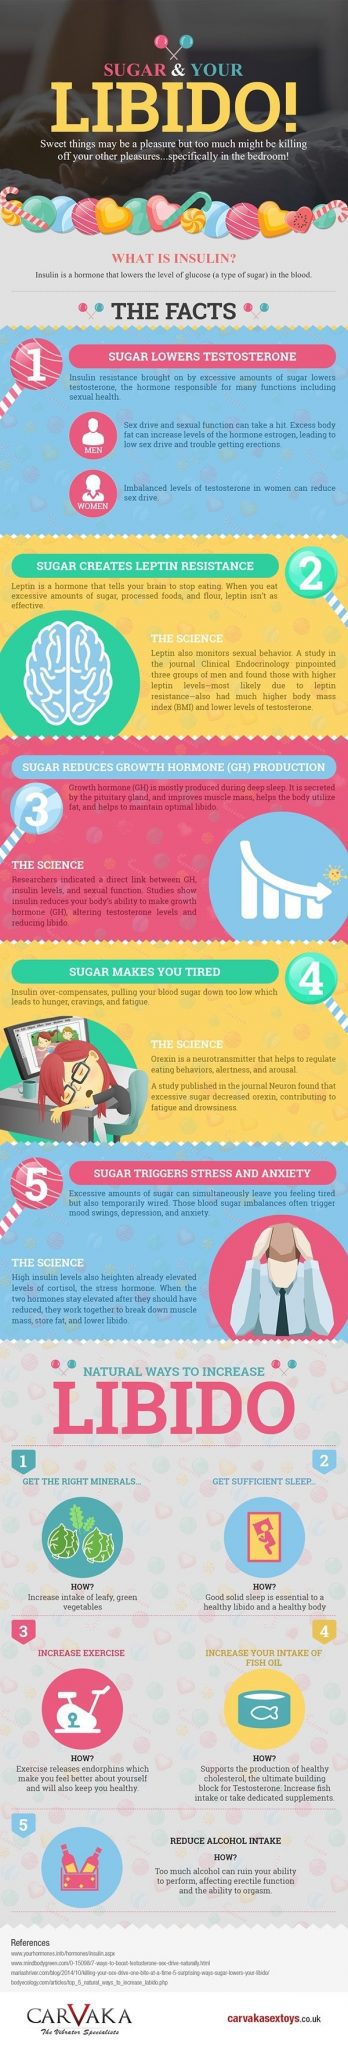 Sugar-and-Libido-infographic